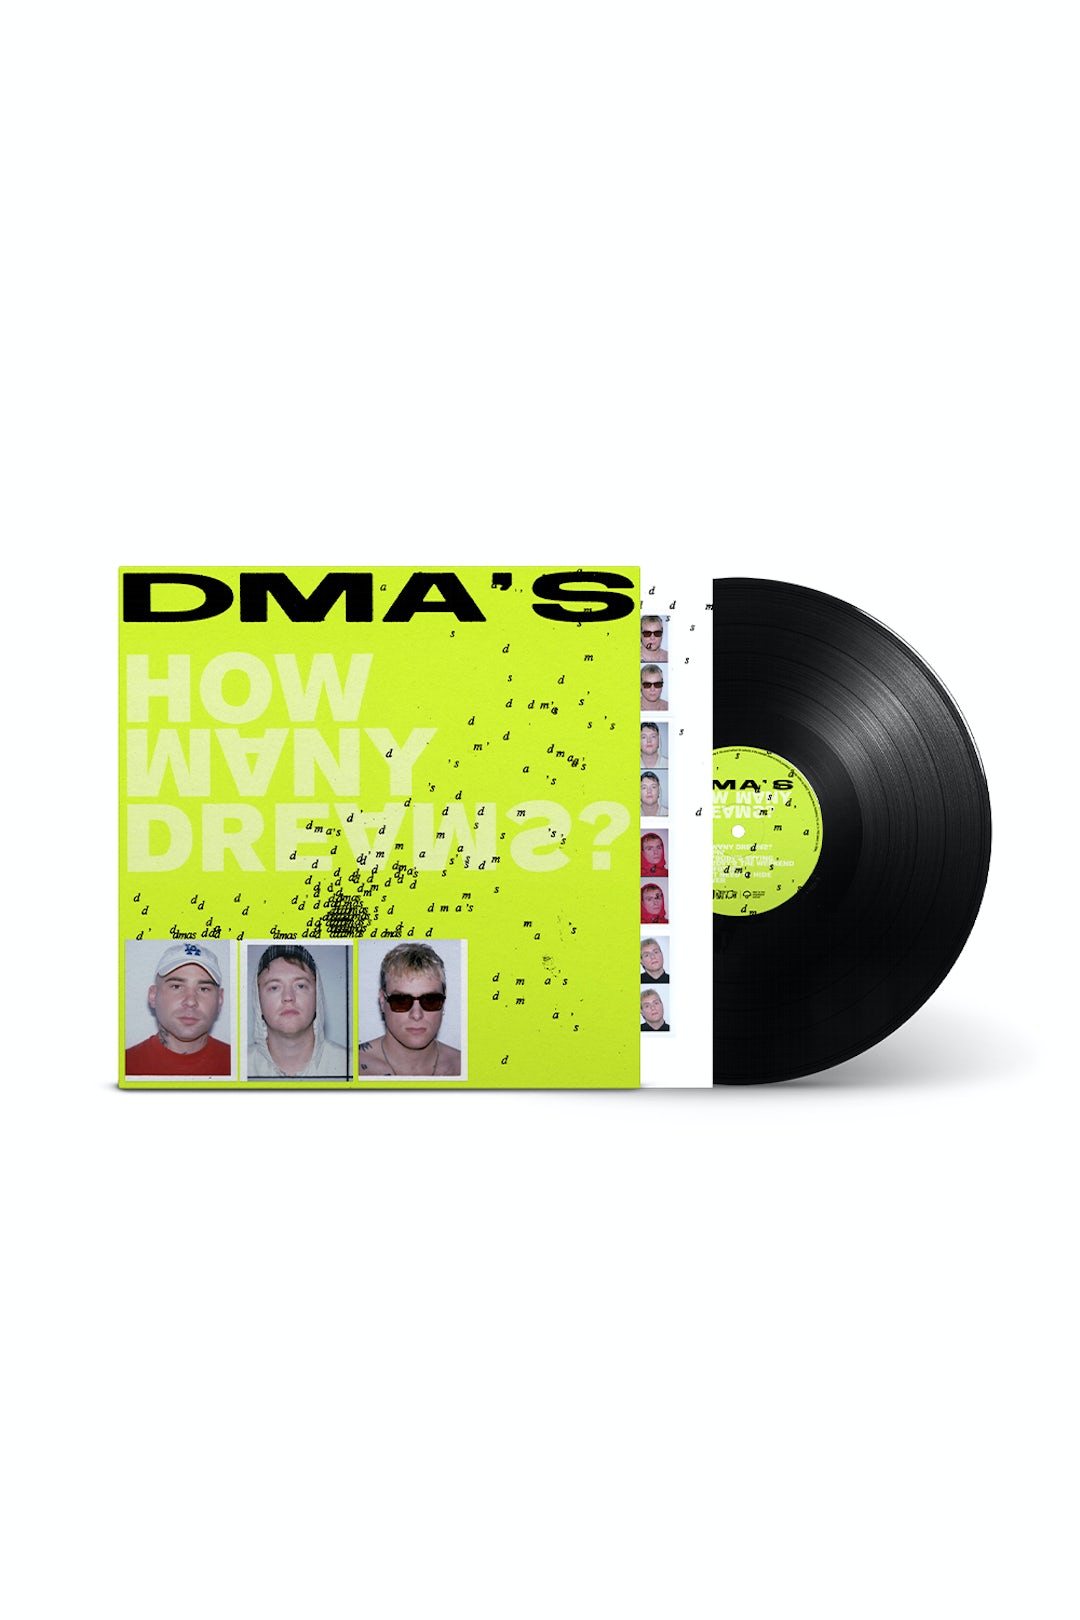 DMA'S - How Many Dreams? [LP] (180 Gram)